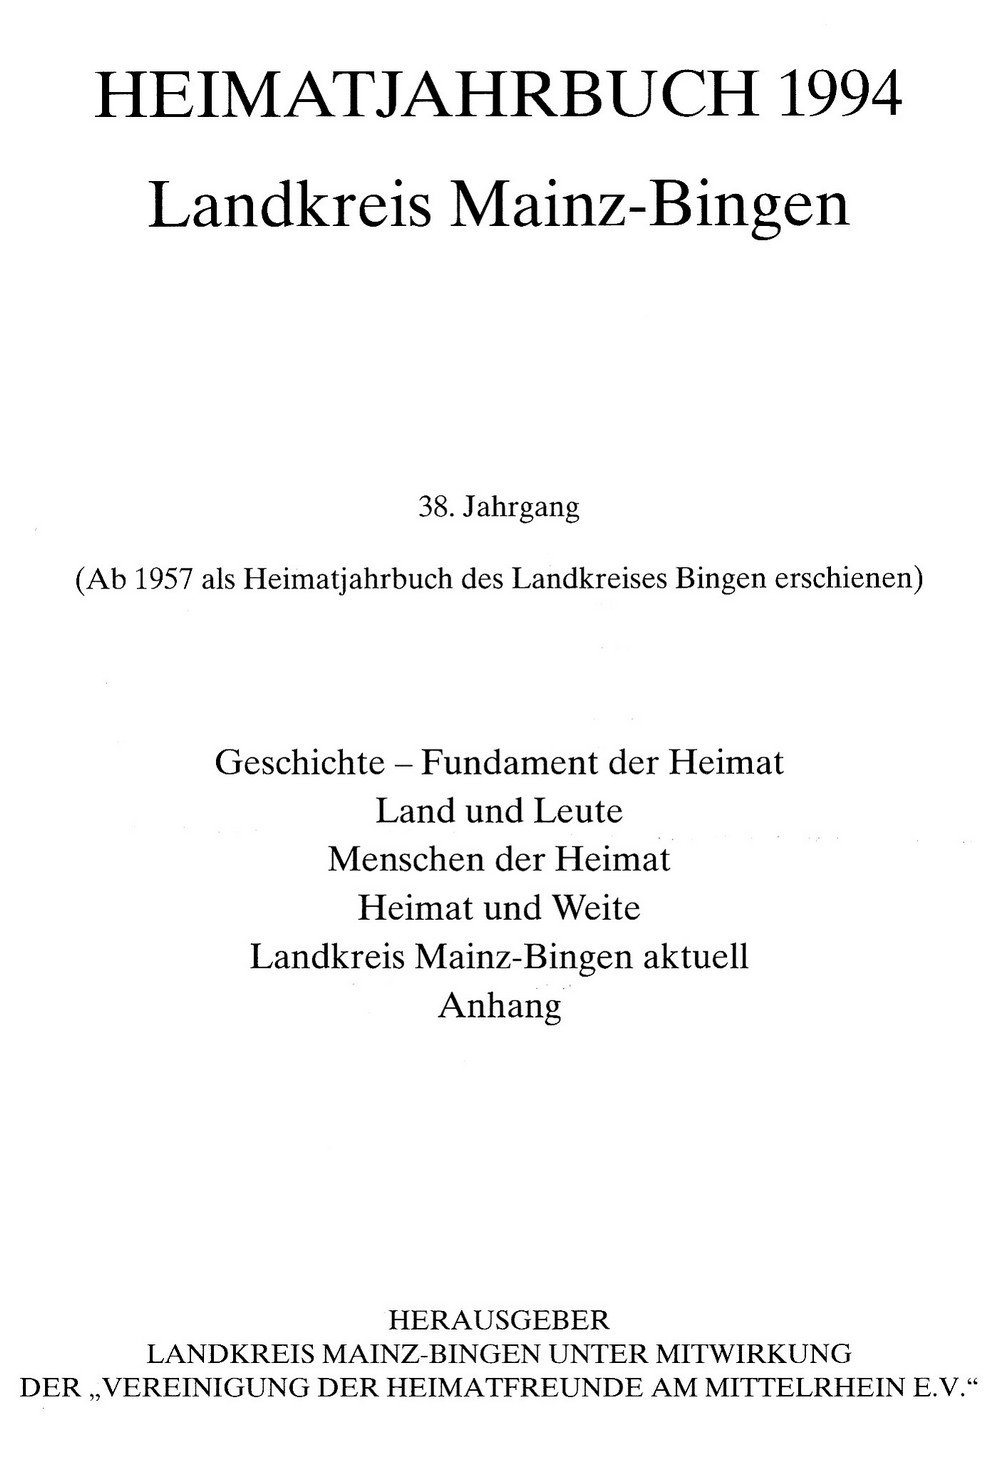 00233 Jahrbuch MZ-BIN 1994 (Kulturverein Guntersblum CC BY-NC-SA)